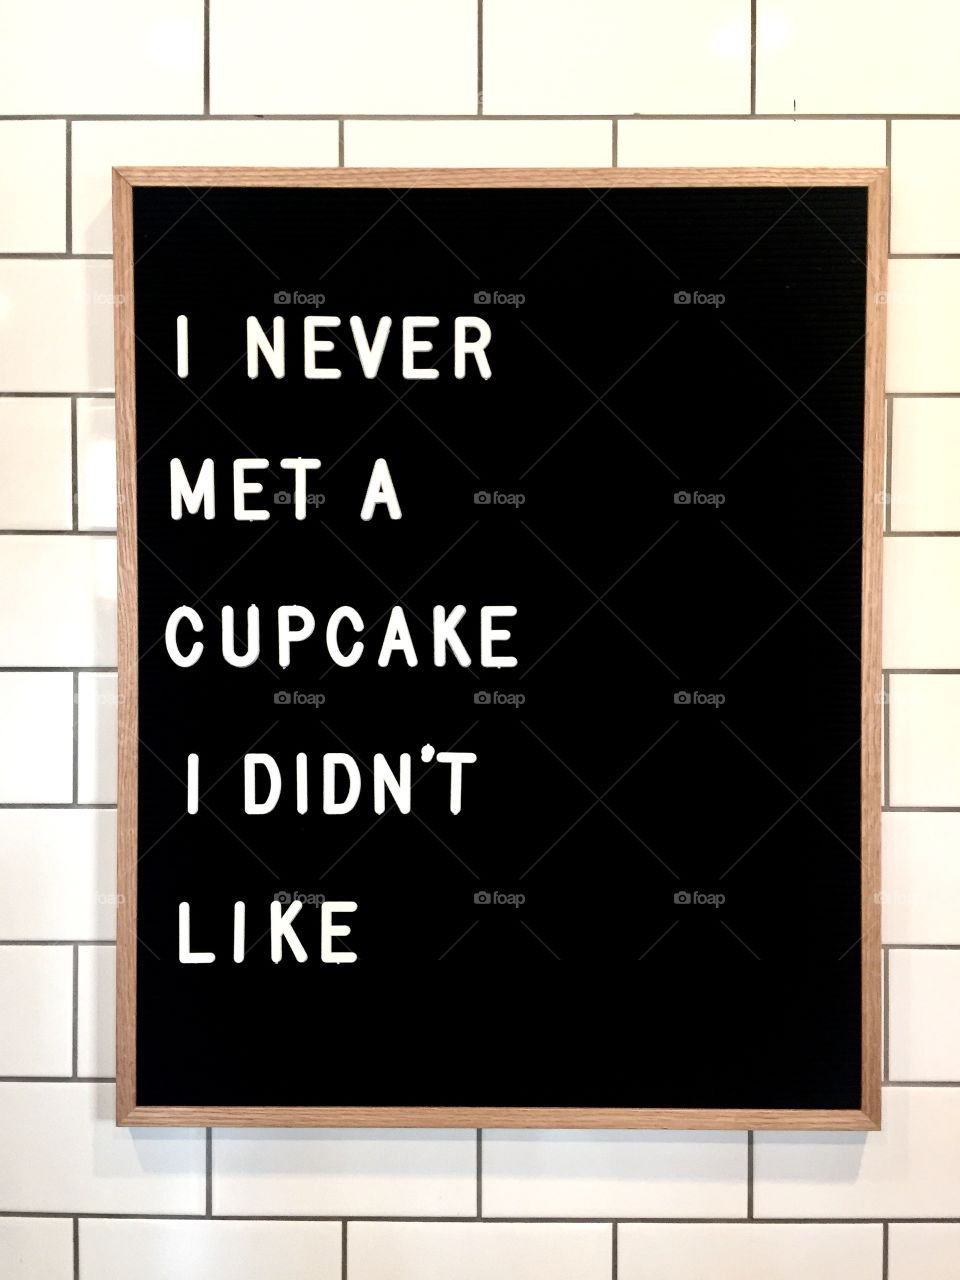 I never met a cupcake I didn't like